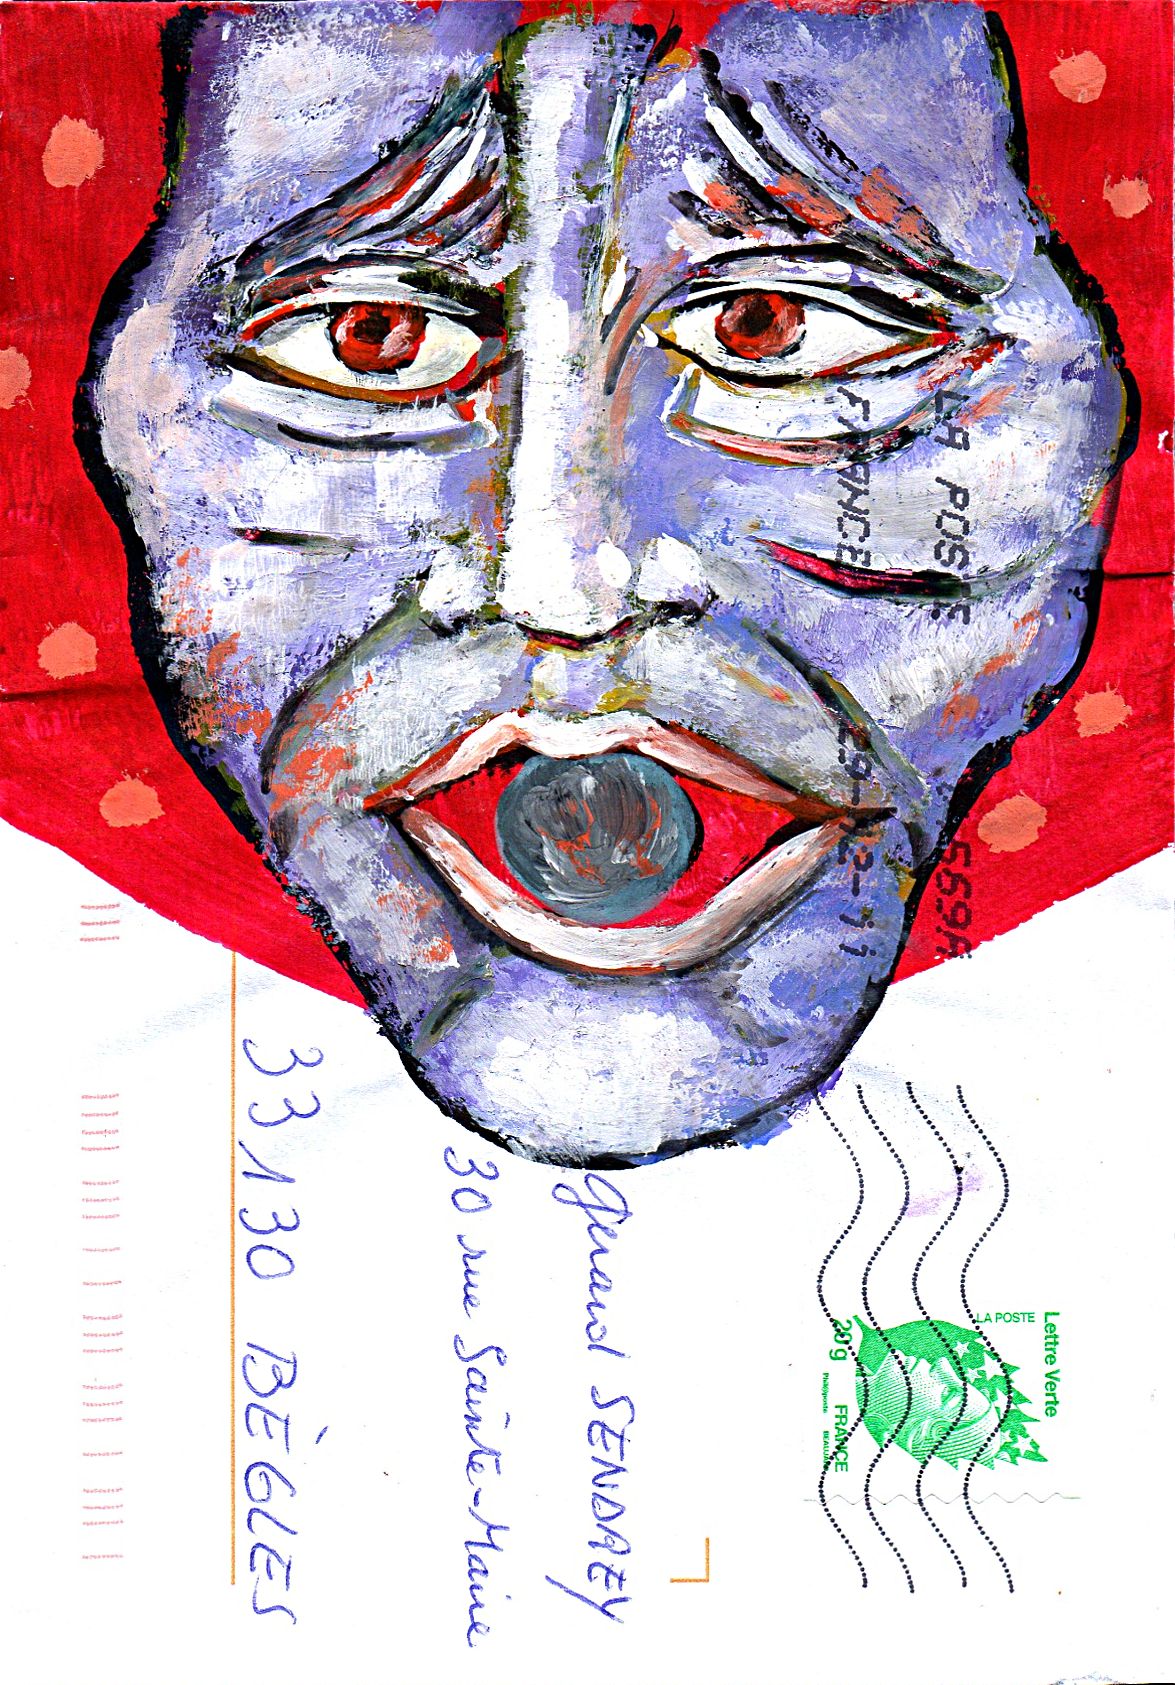 THUILLIER Jean-Luc 无题 / 邮件艺术信封 / 纸上混合媒体 / 背面签名 / 16 x 11.2 cm